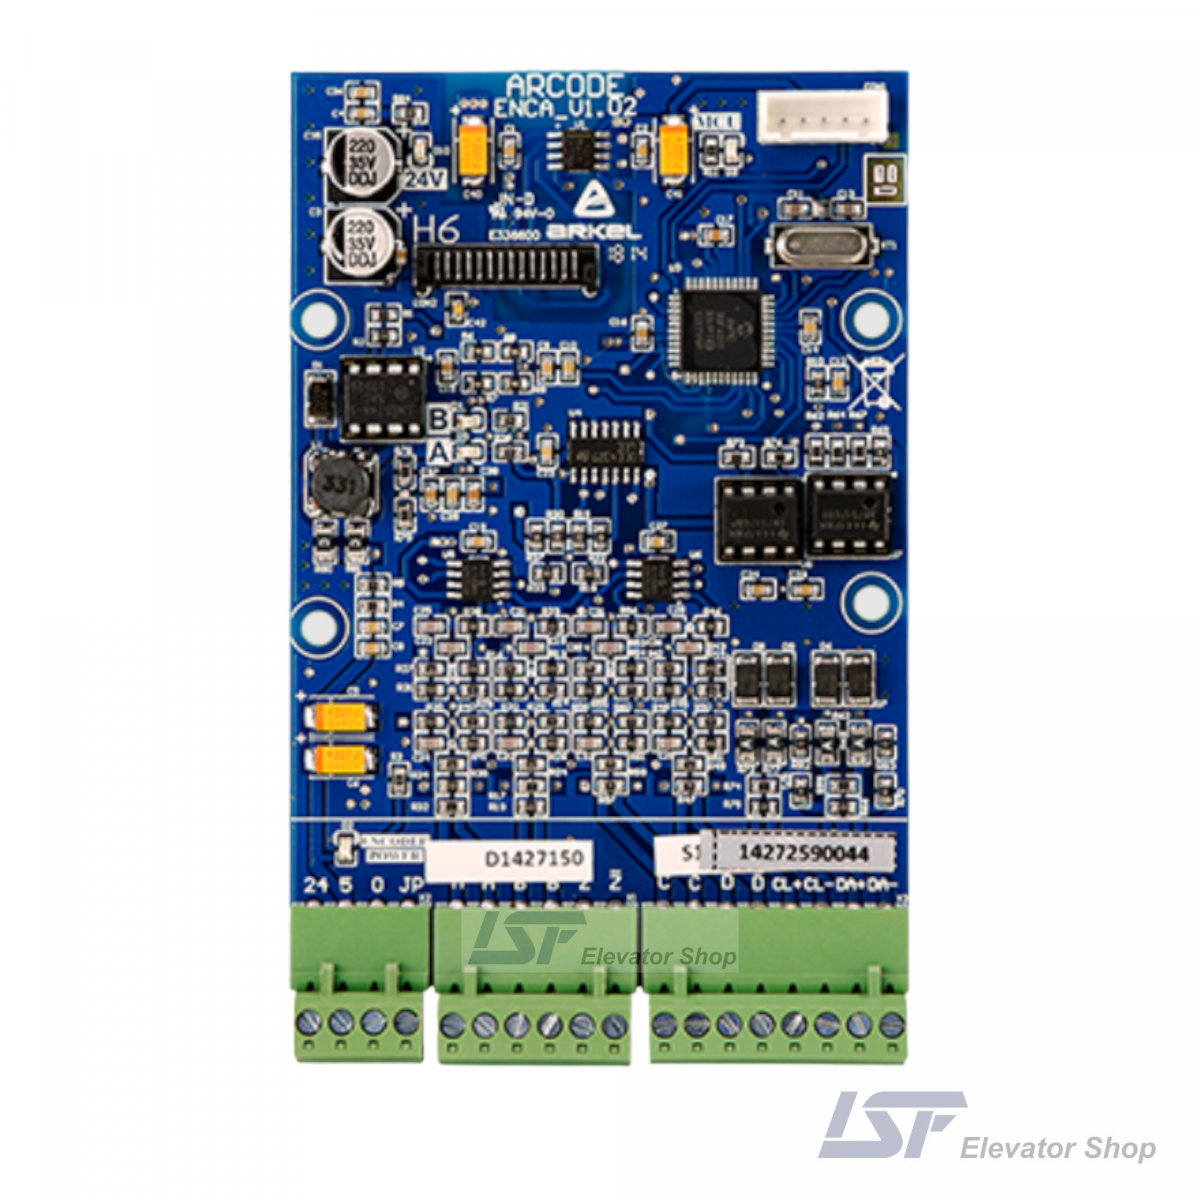 Arkel Enca Absolute Encoder Board - for Lift Panels (4)